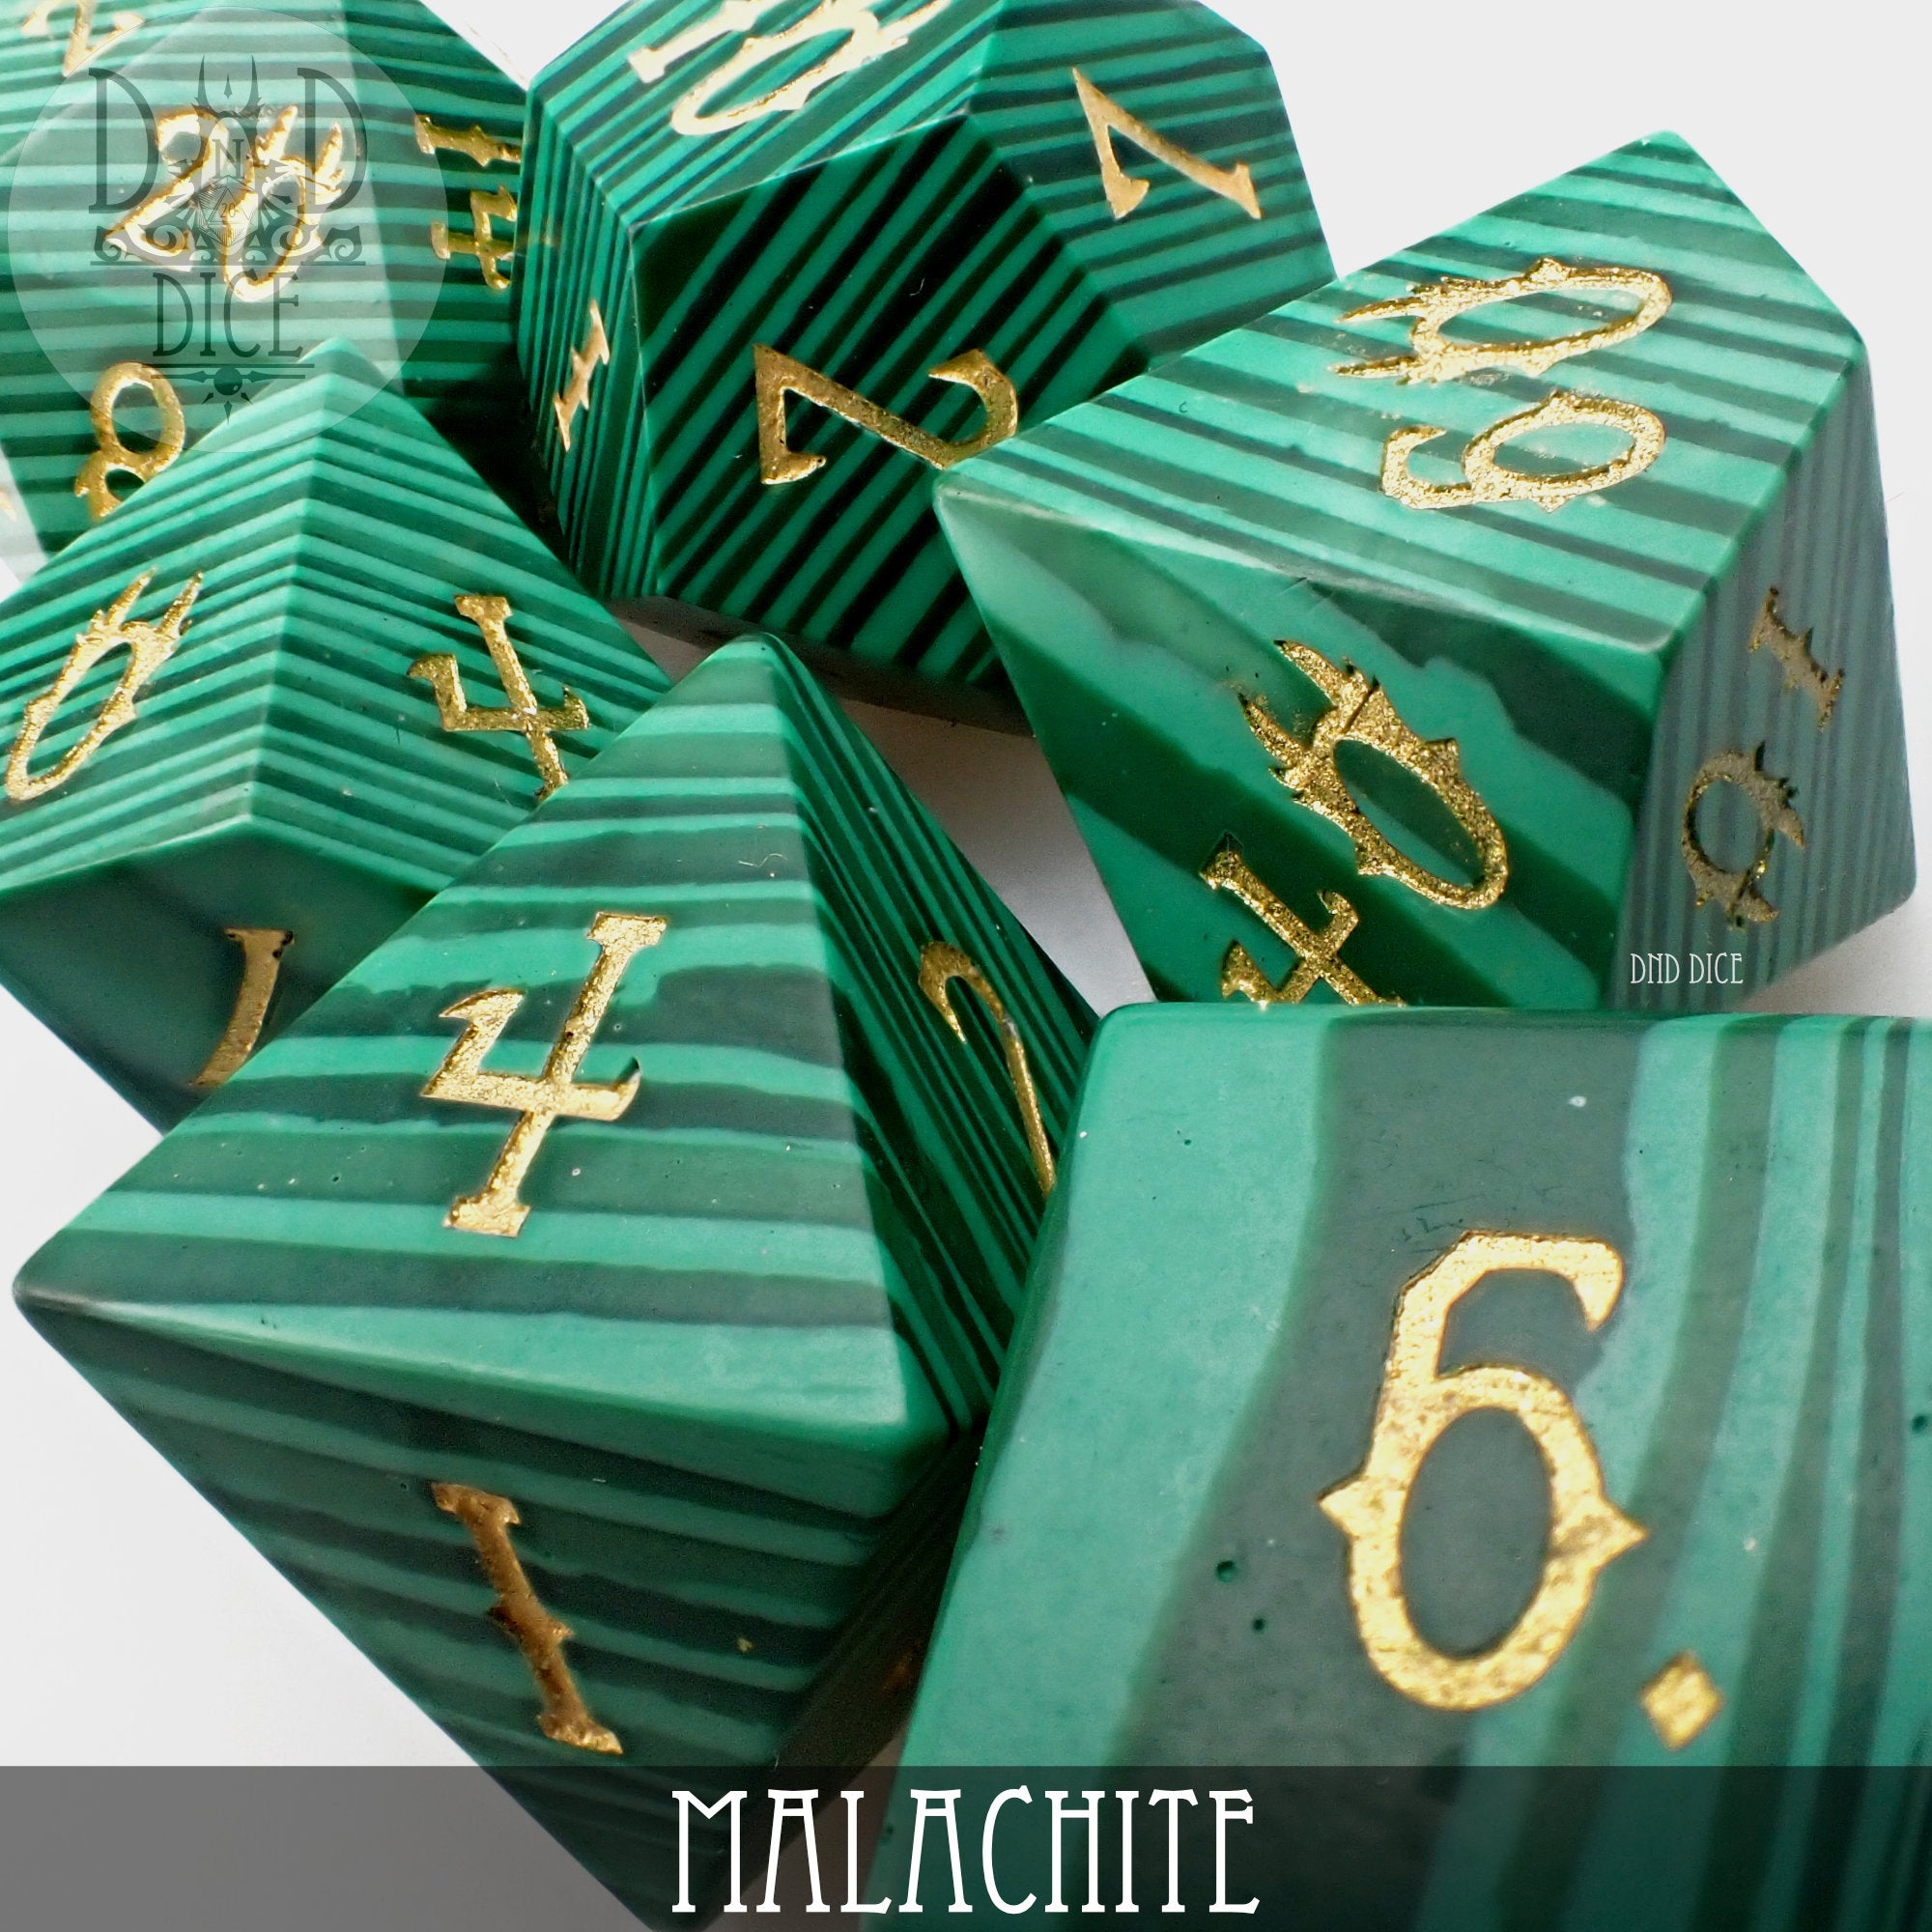 Malachite (Gift Box)